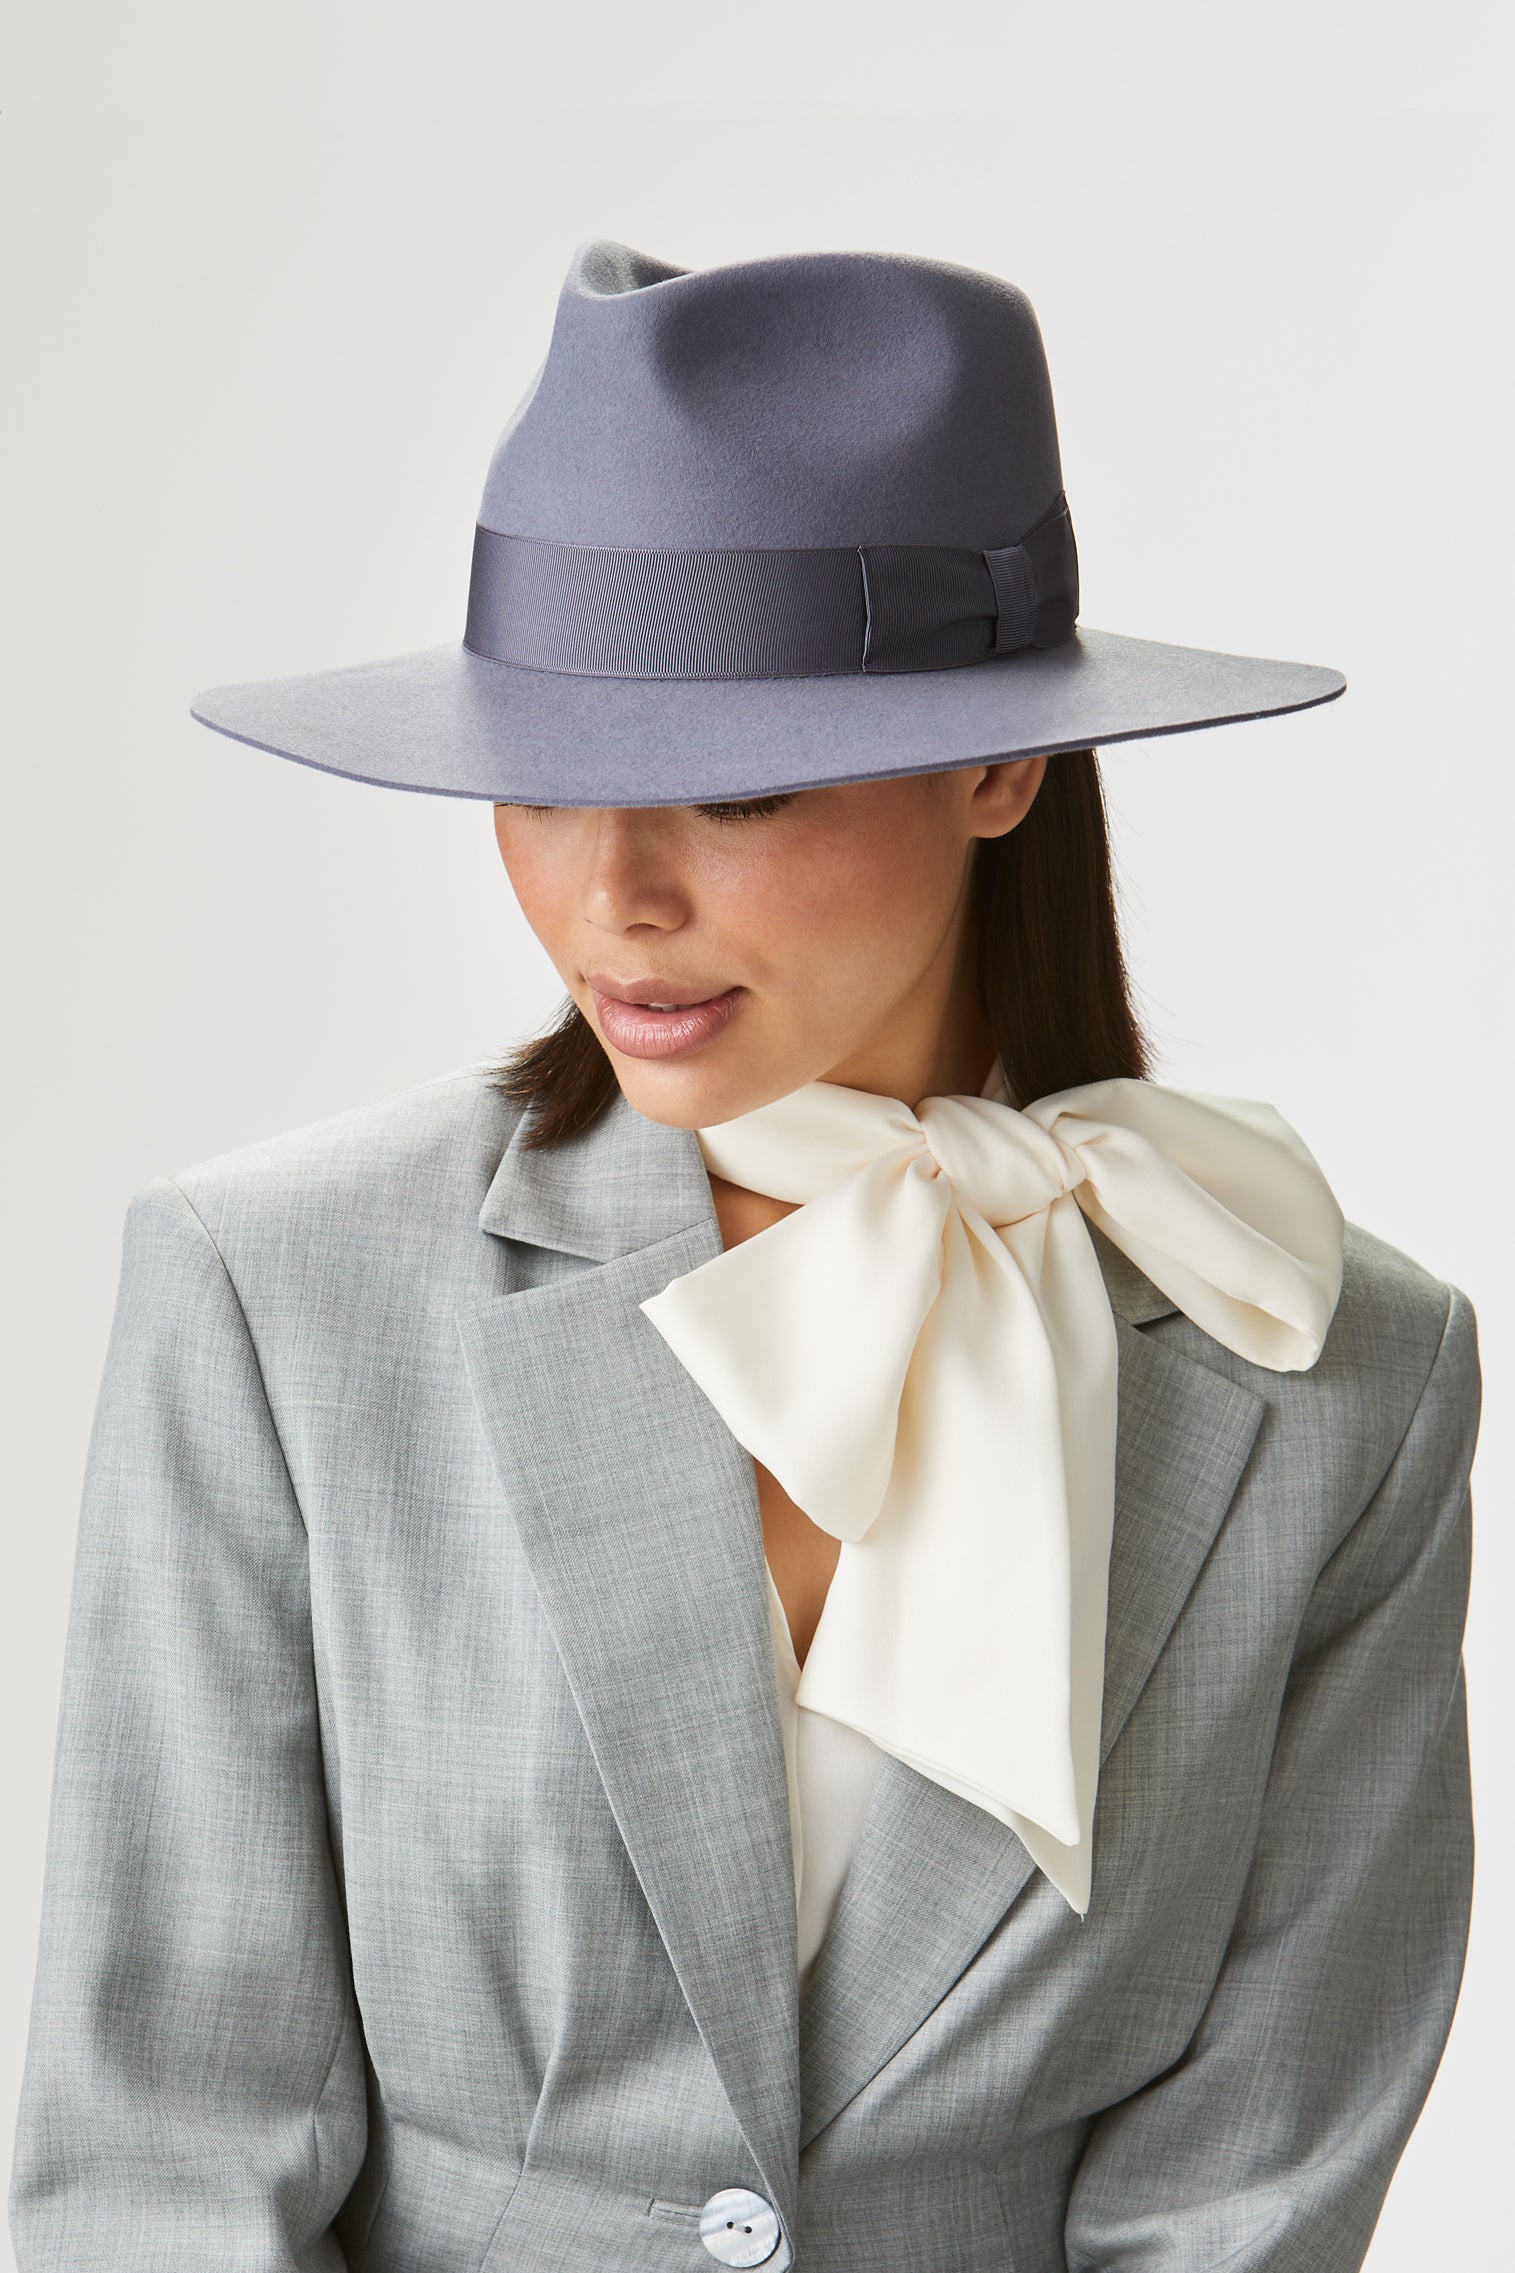 Toni Blue Flat-Brim Fedora - Hats for Tall People - Lock & Co. Hatters London UK